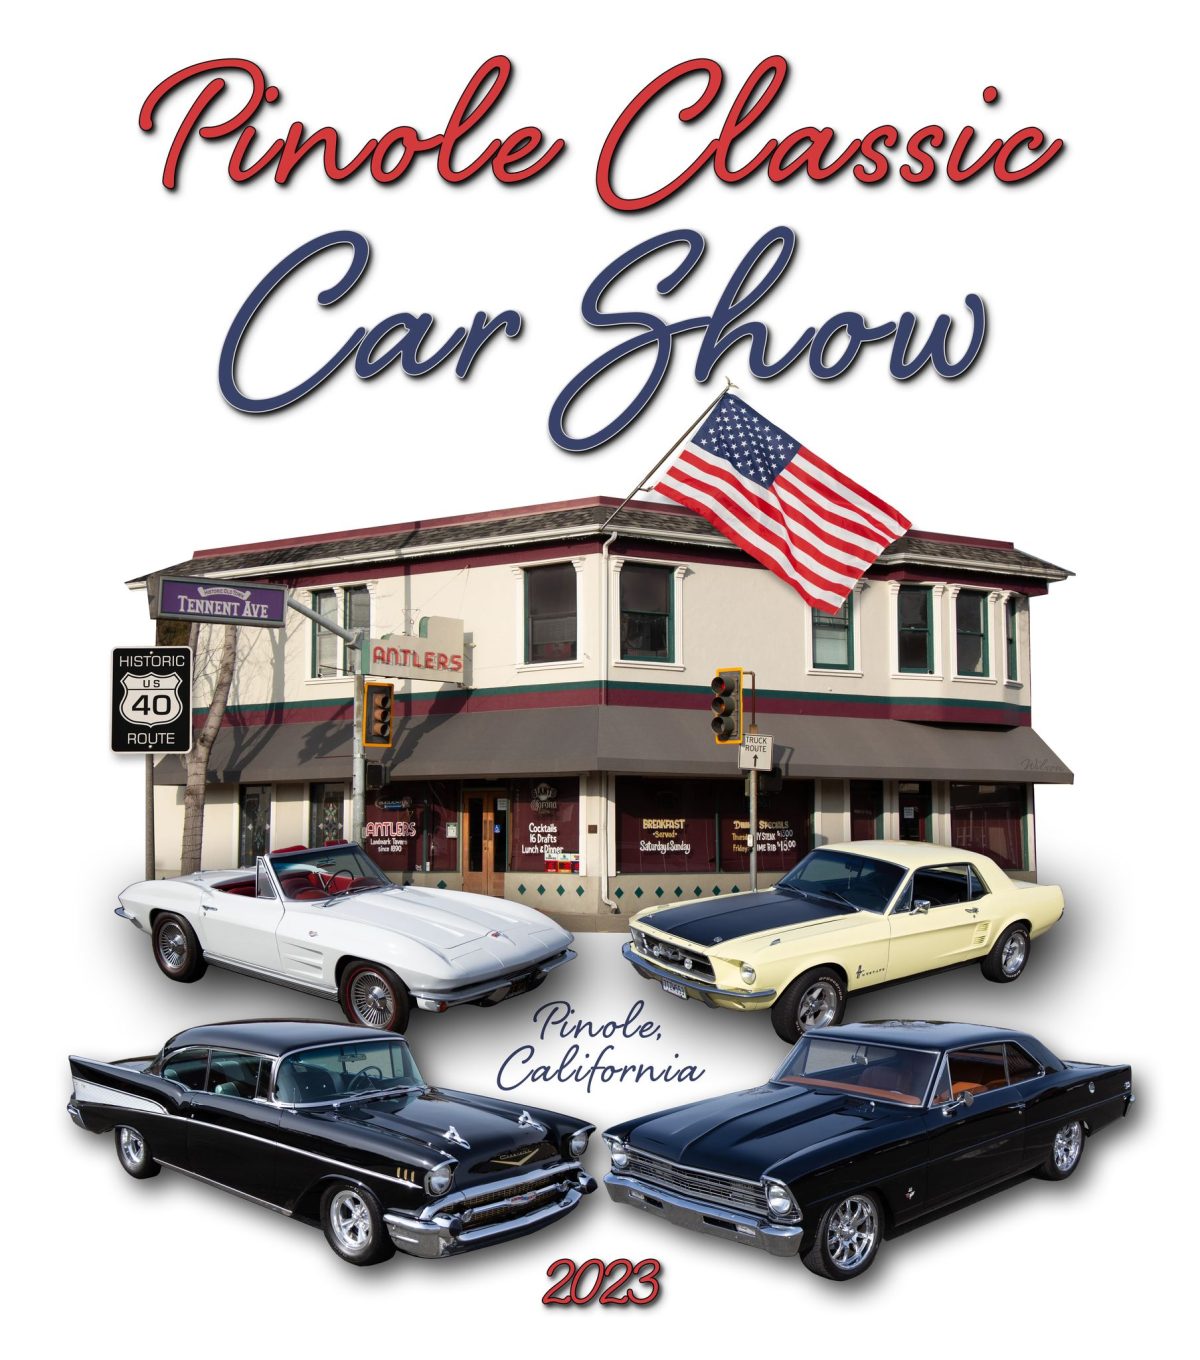 Pinole’s Annual Classic Car Show